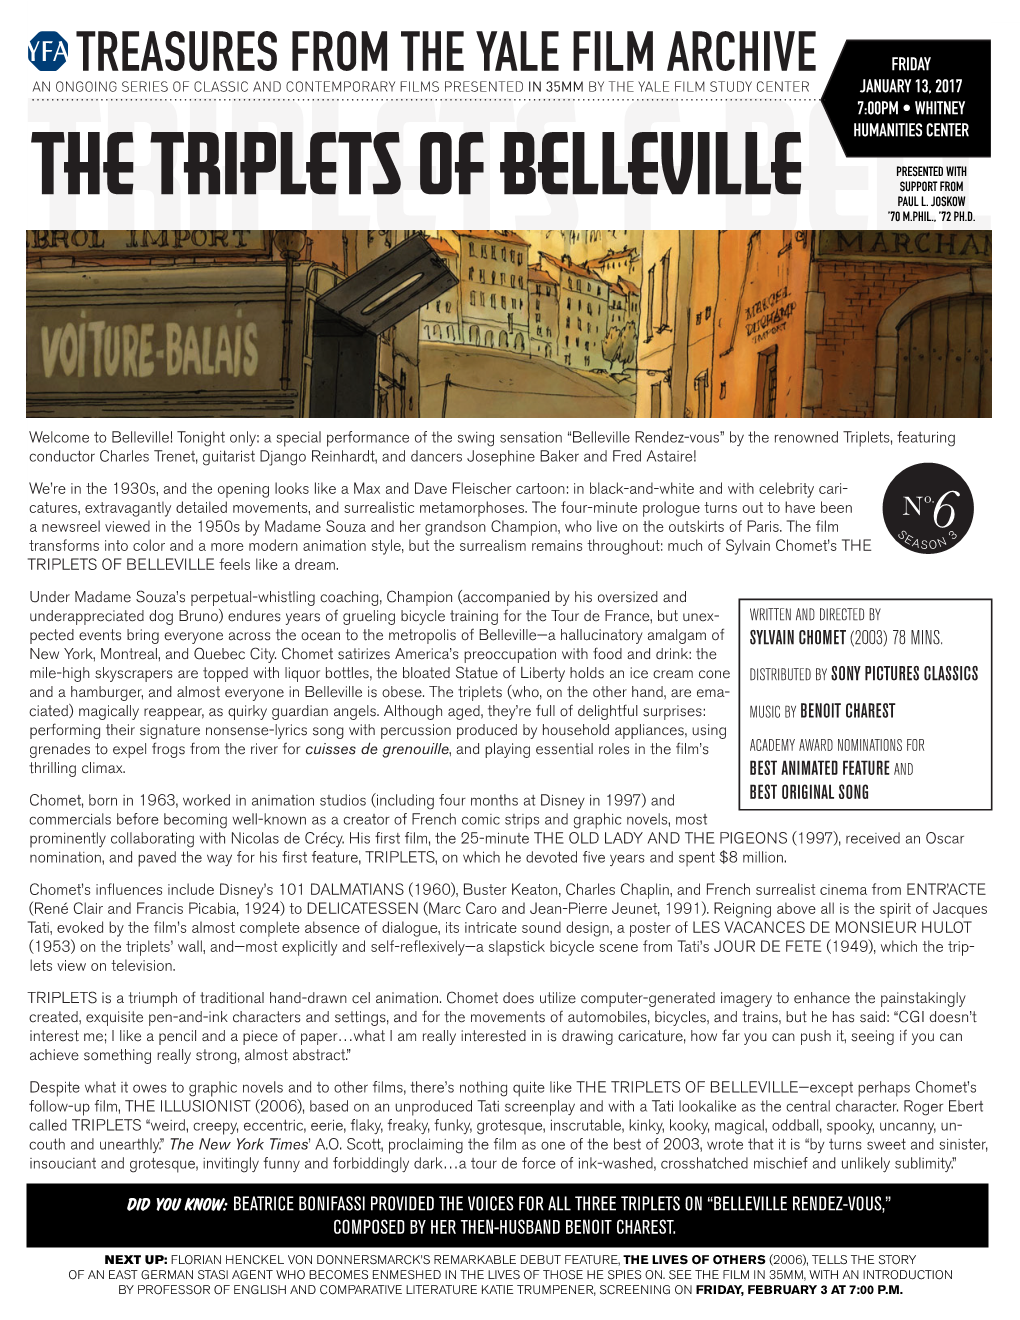 The Triplets of Belleville Paul L